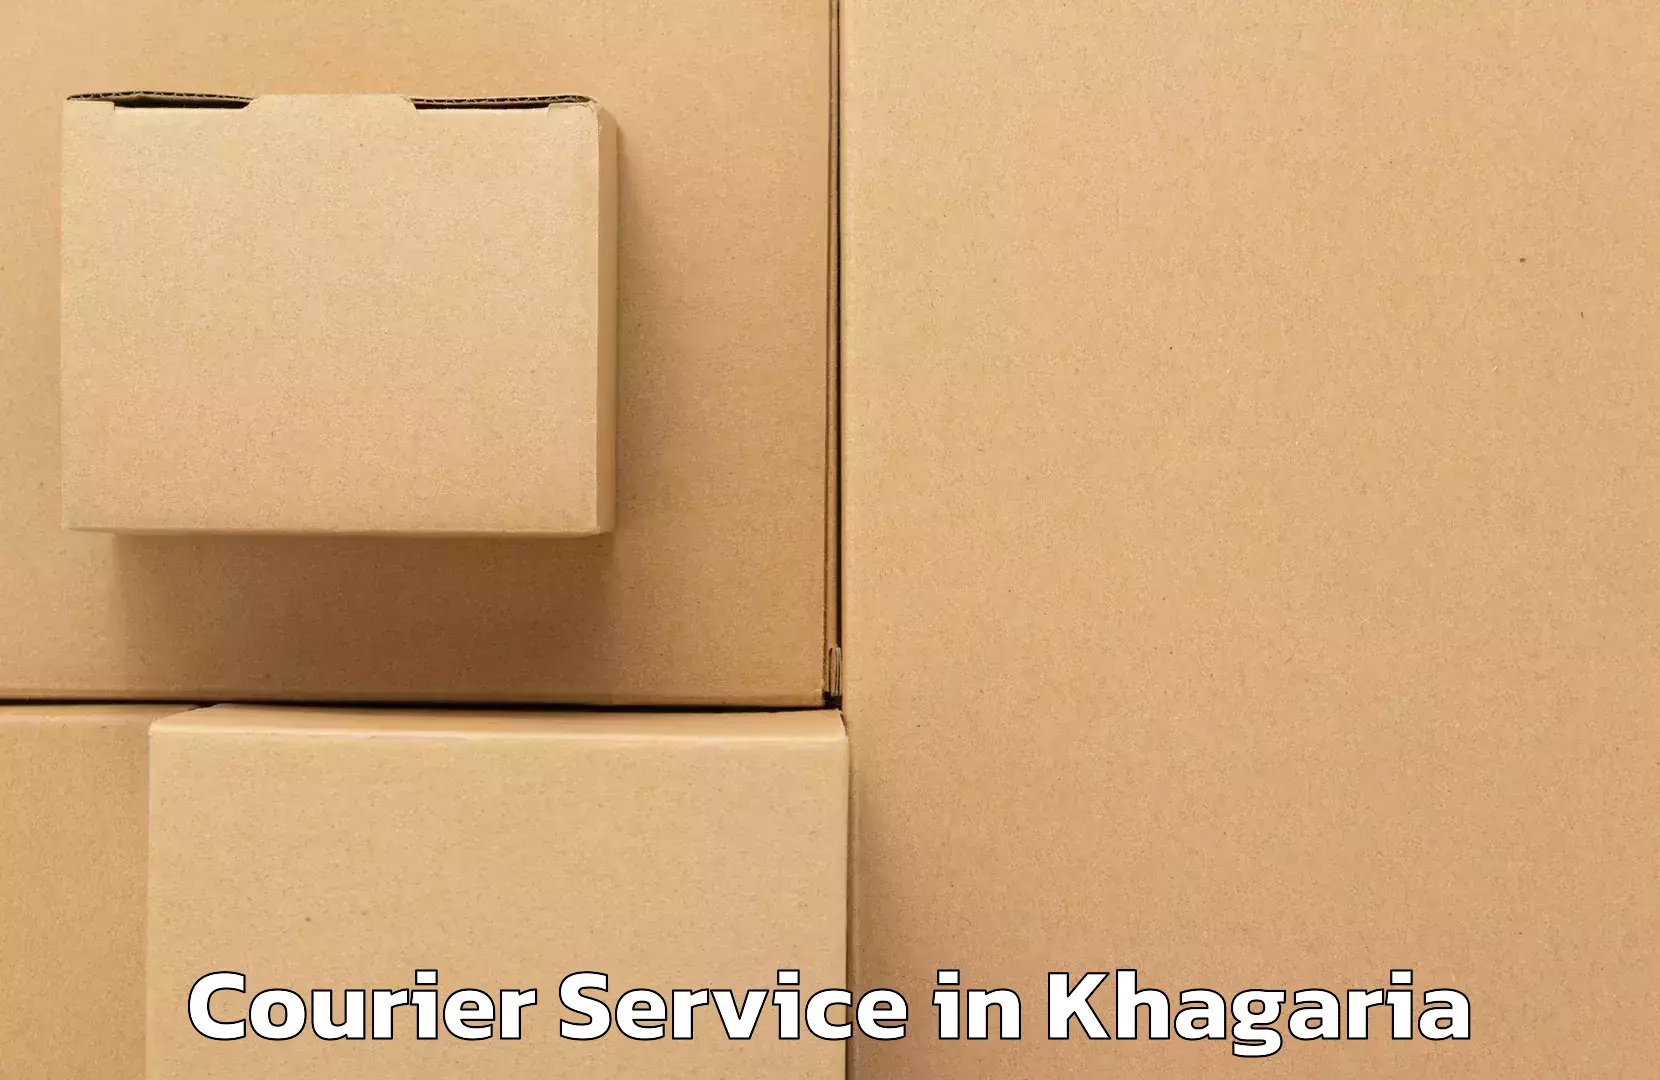 Express package handling in Khagaria